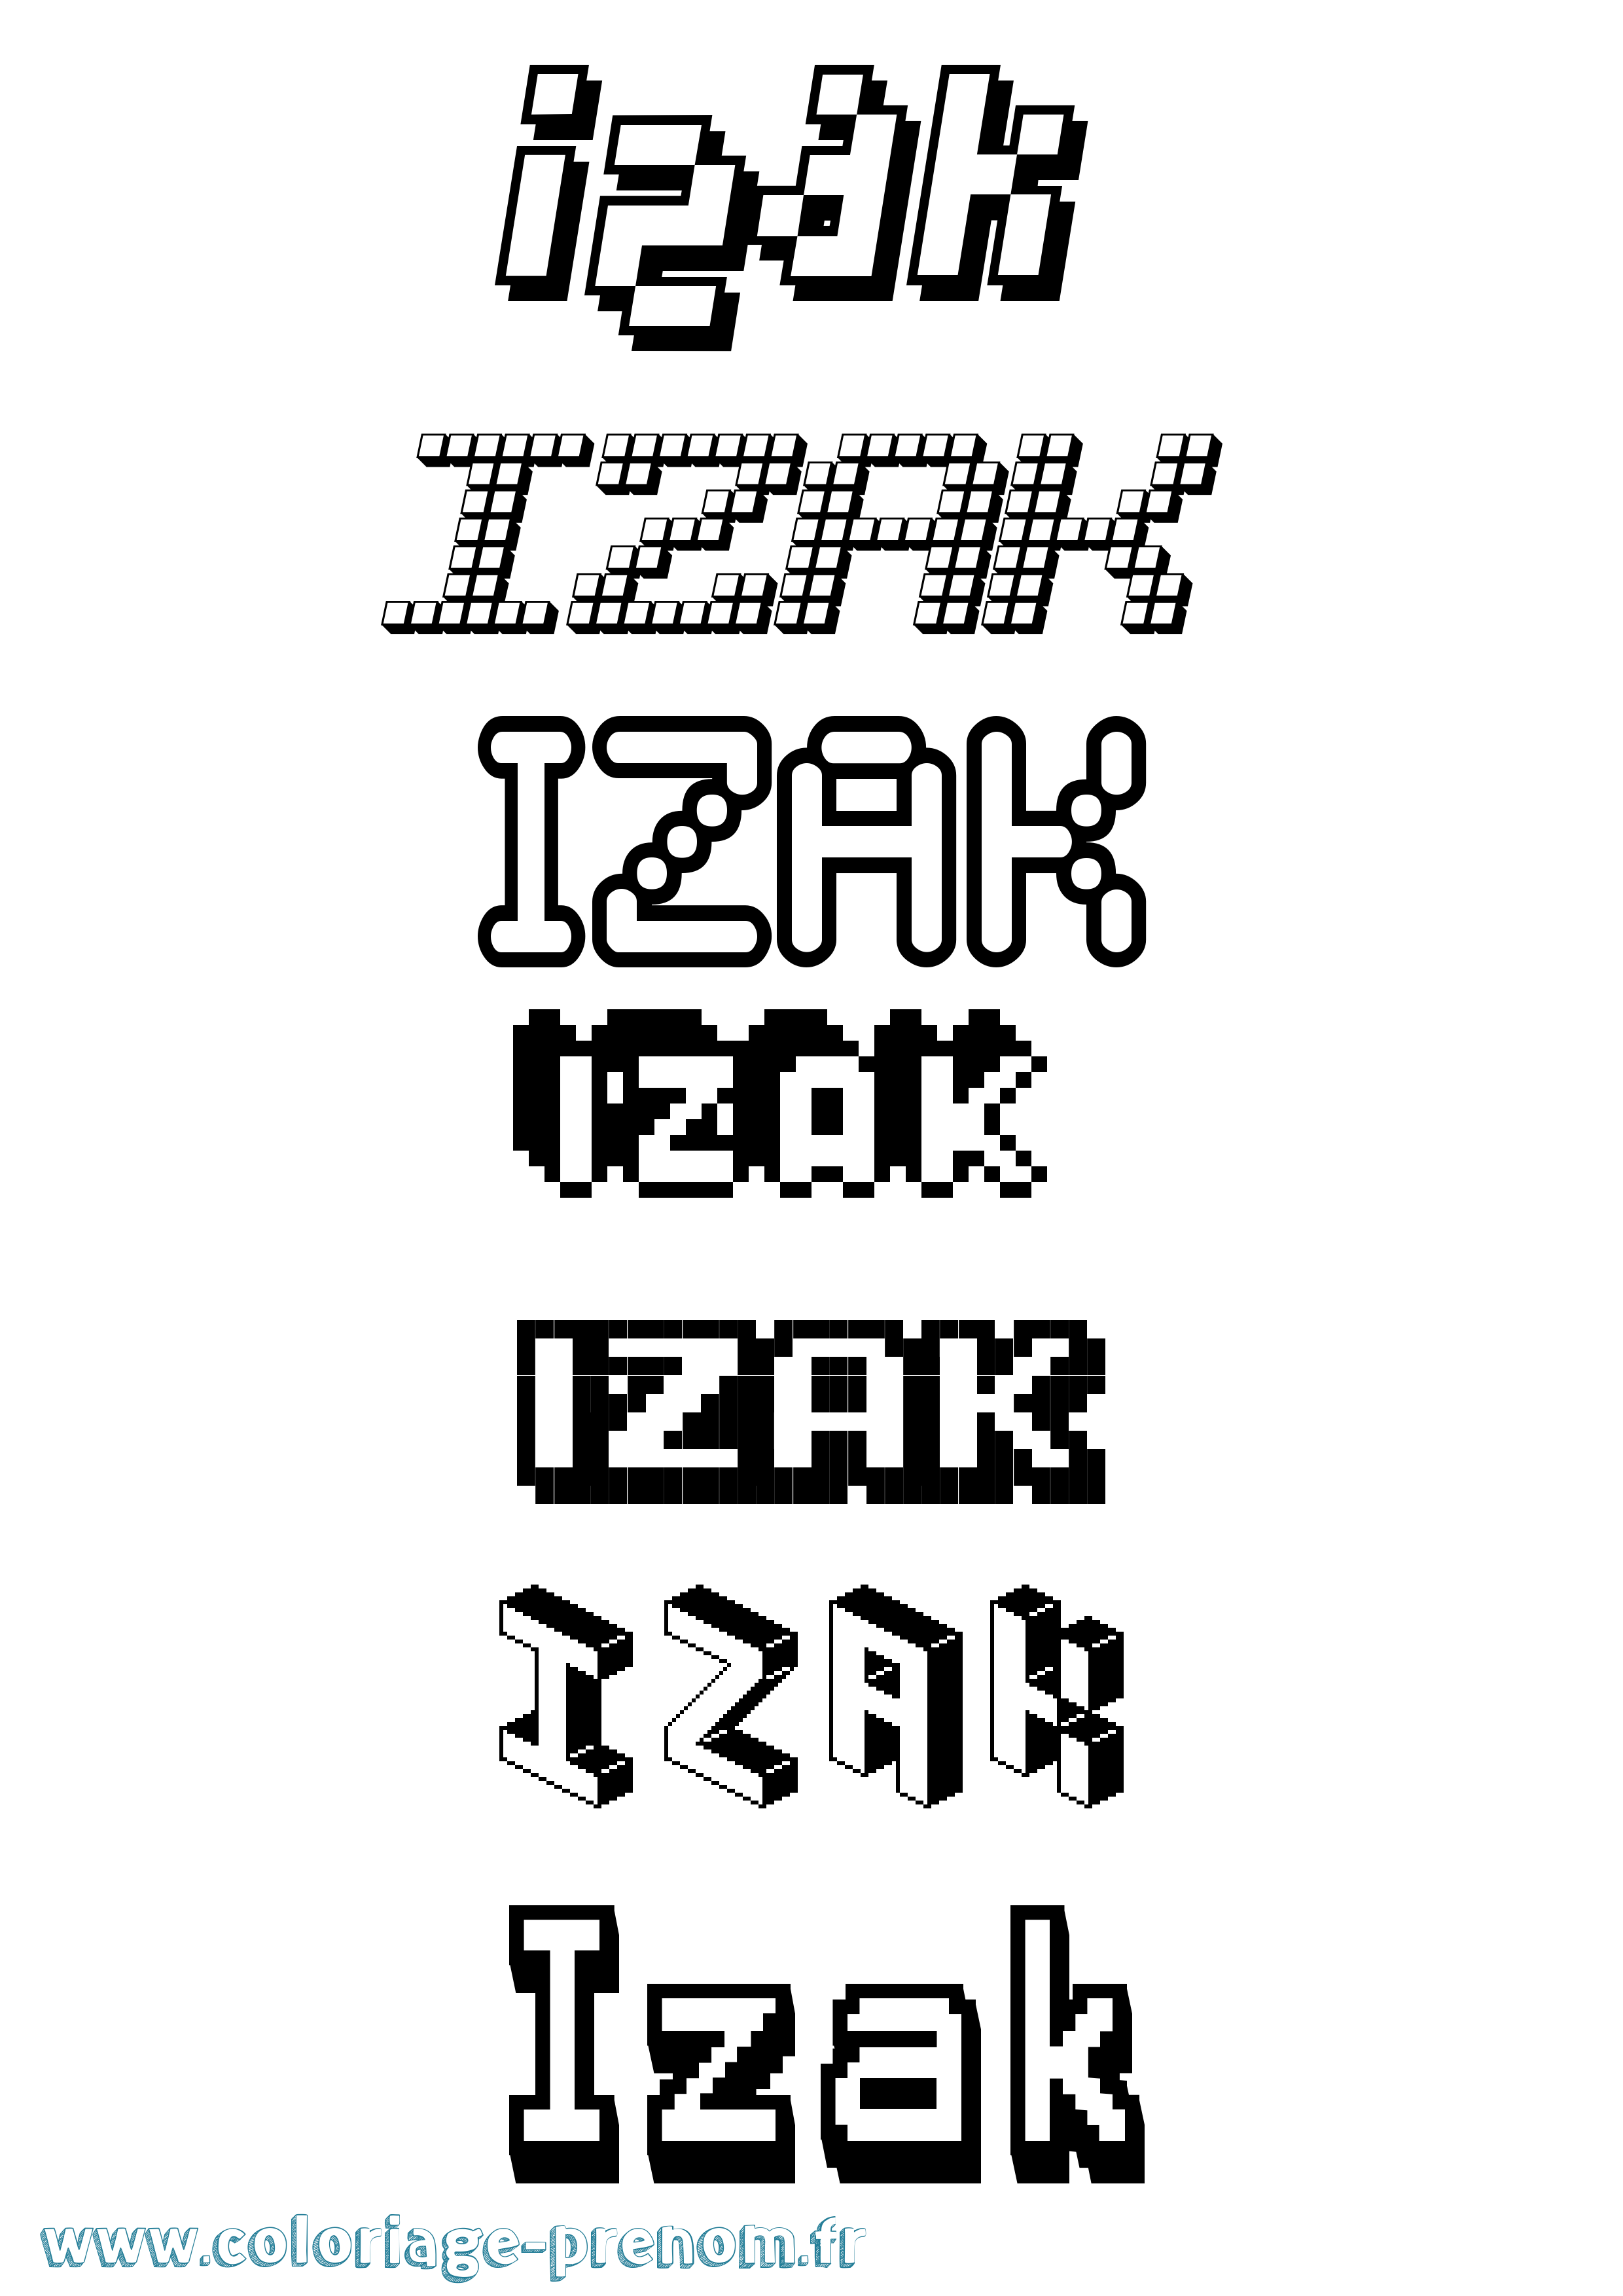 Coloriage prénom Izak Pixel